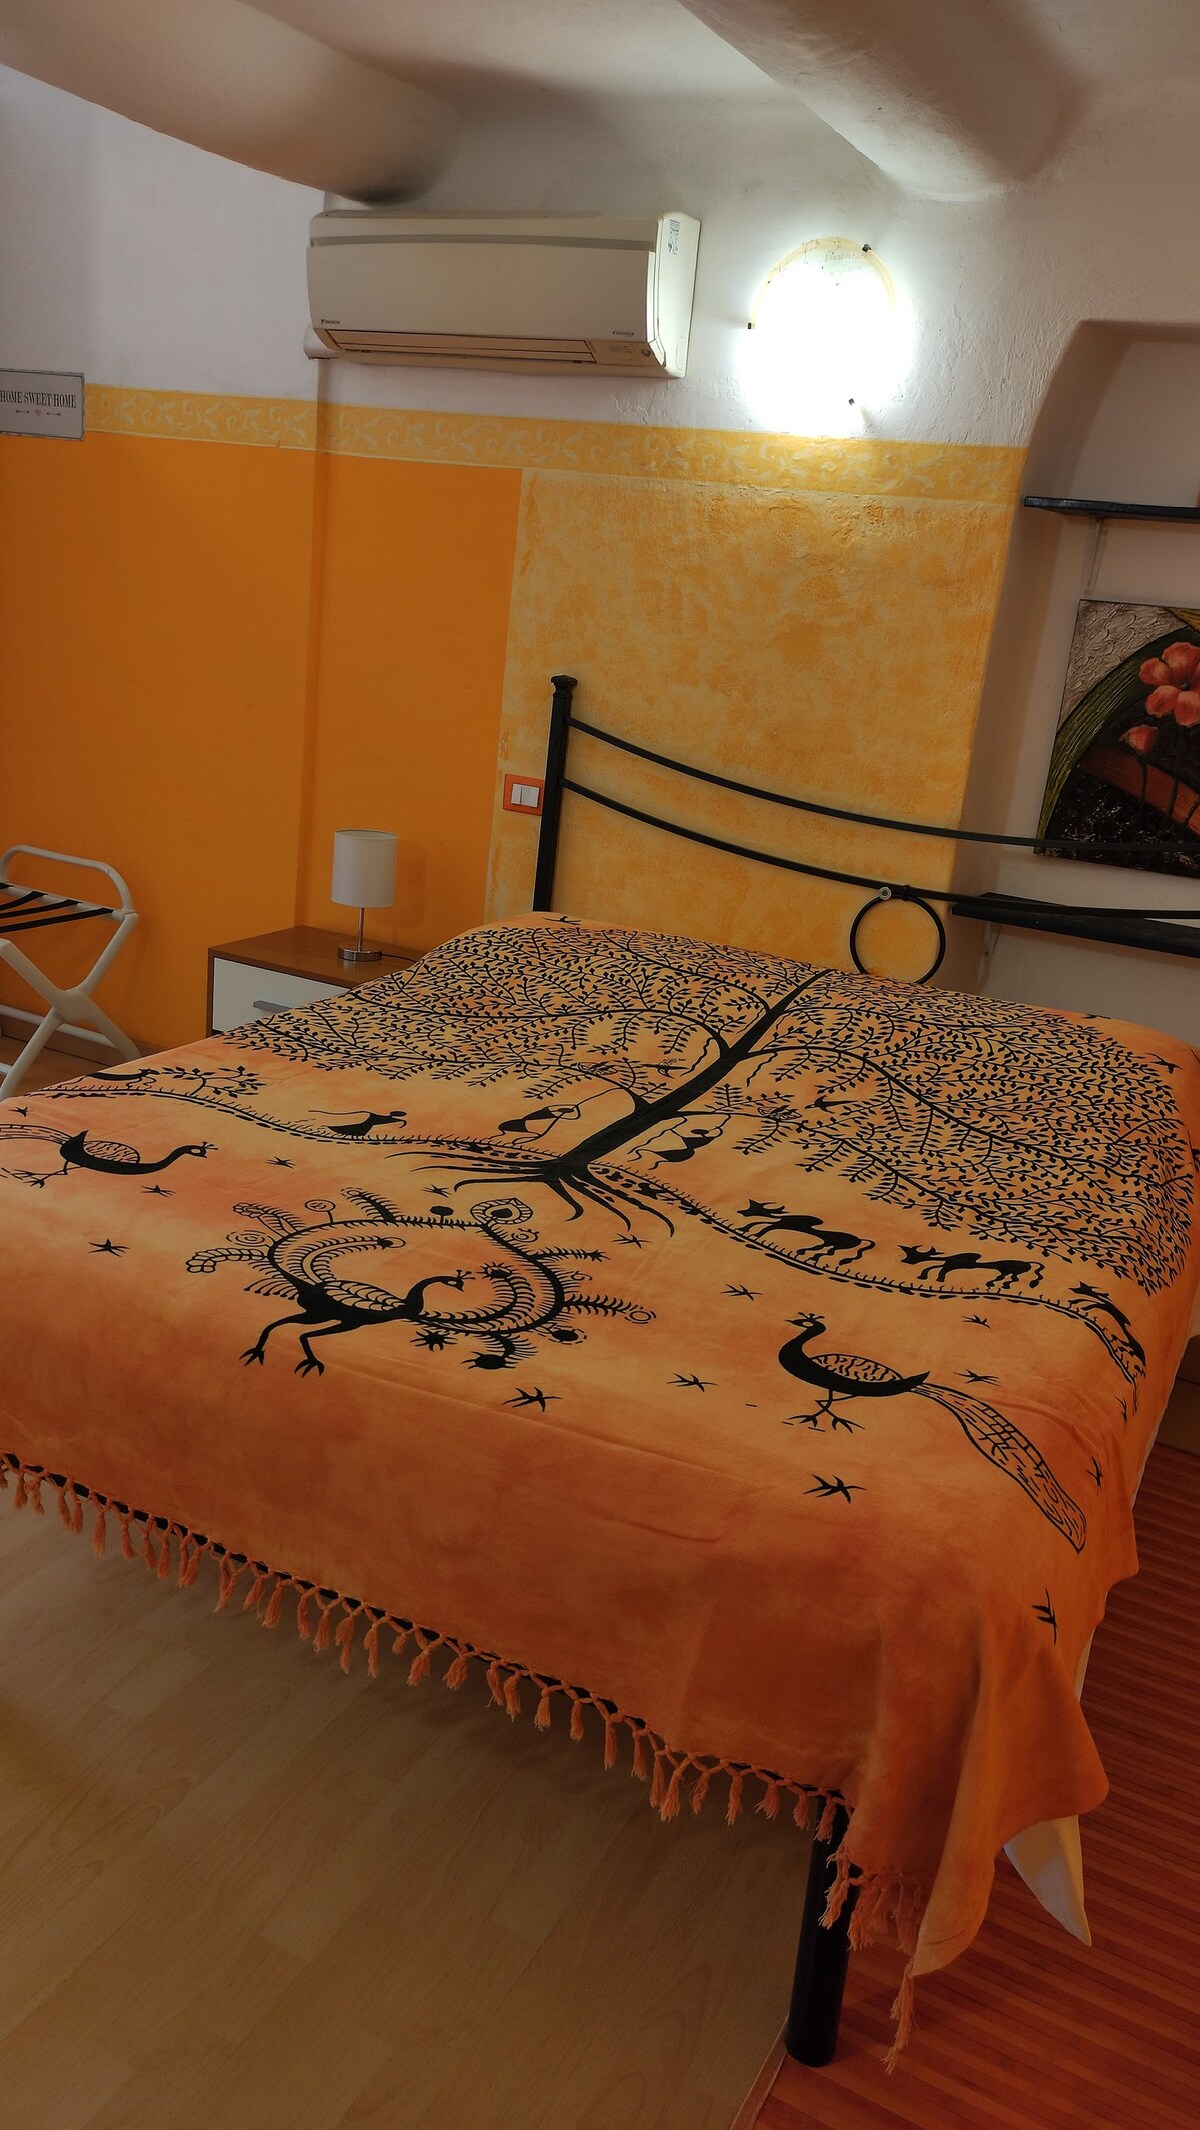 Guest House "Vasco's rooms" Orange Studio Flat